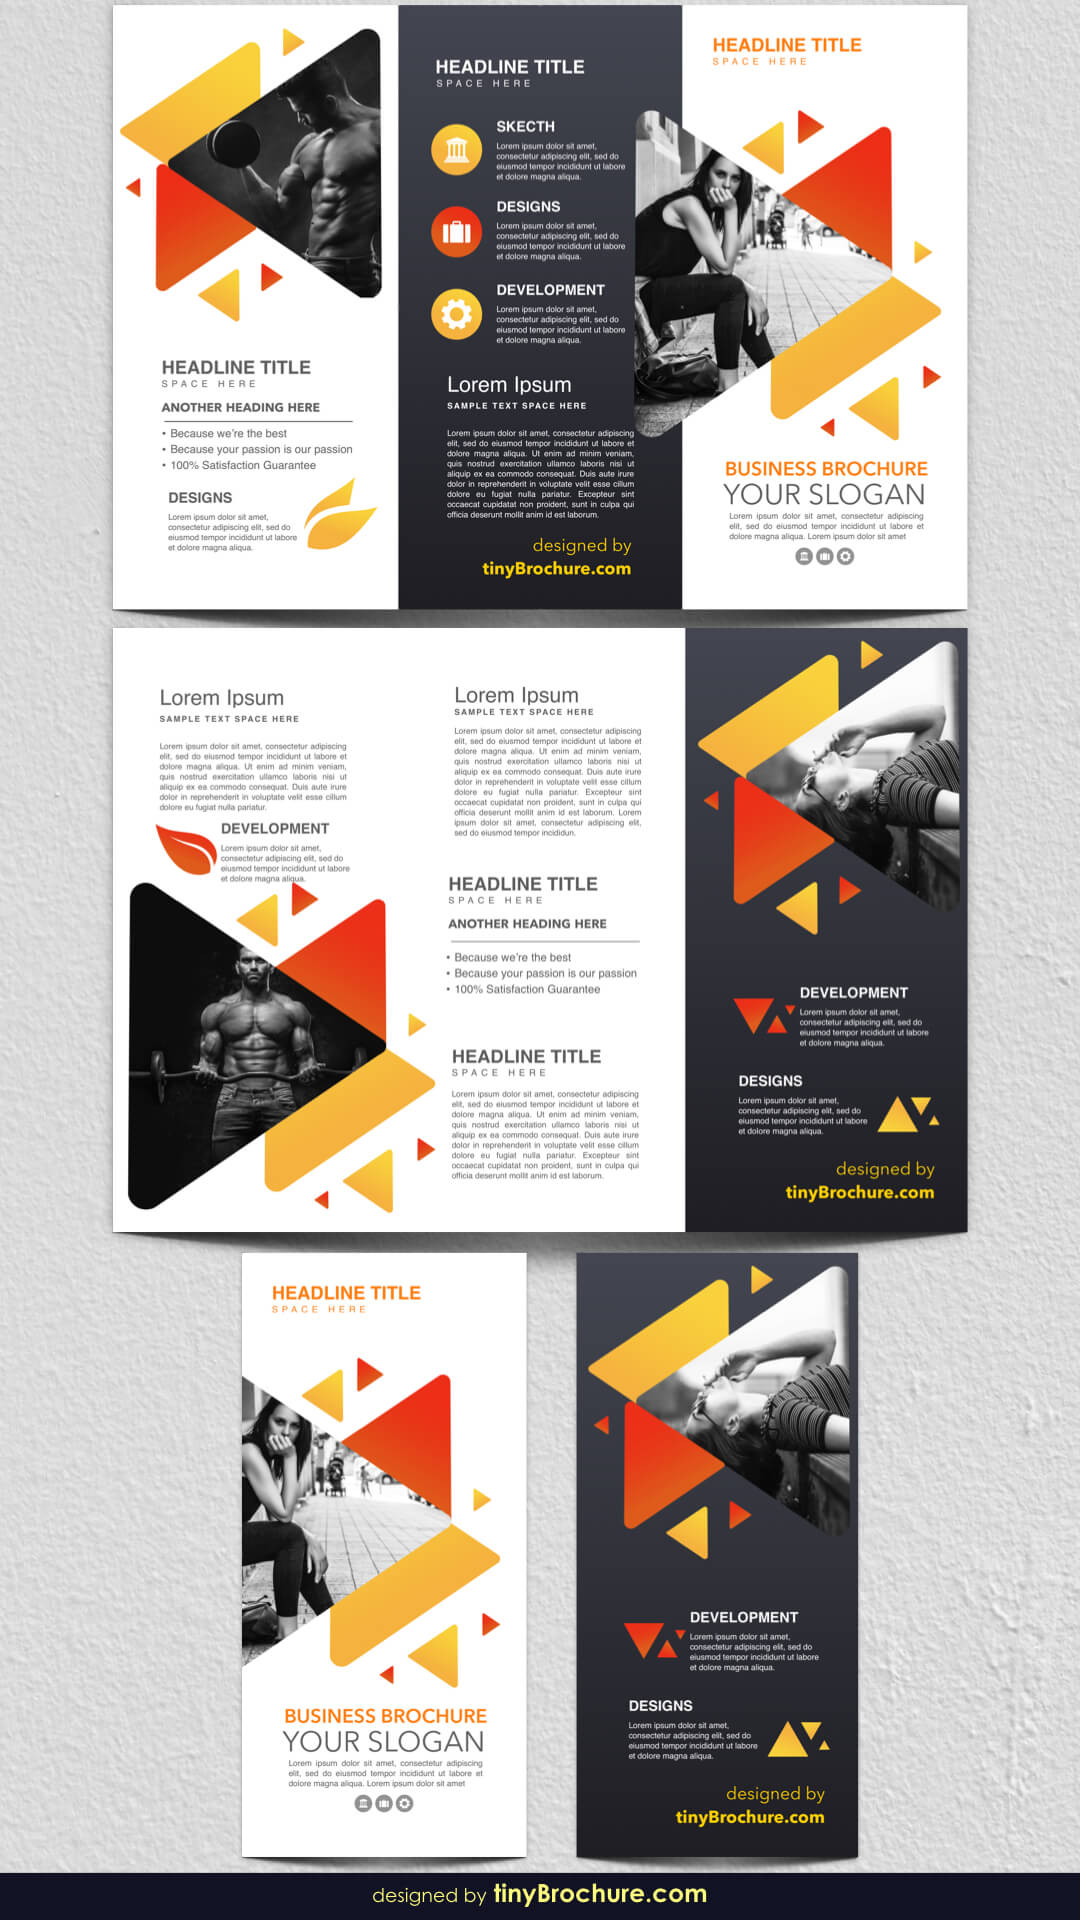 3 Panel Brochure Template Google Docs 2019 | Graphic Design Regarding Travel Brochure Template Google Docs